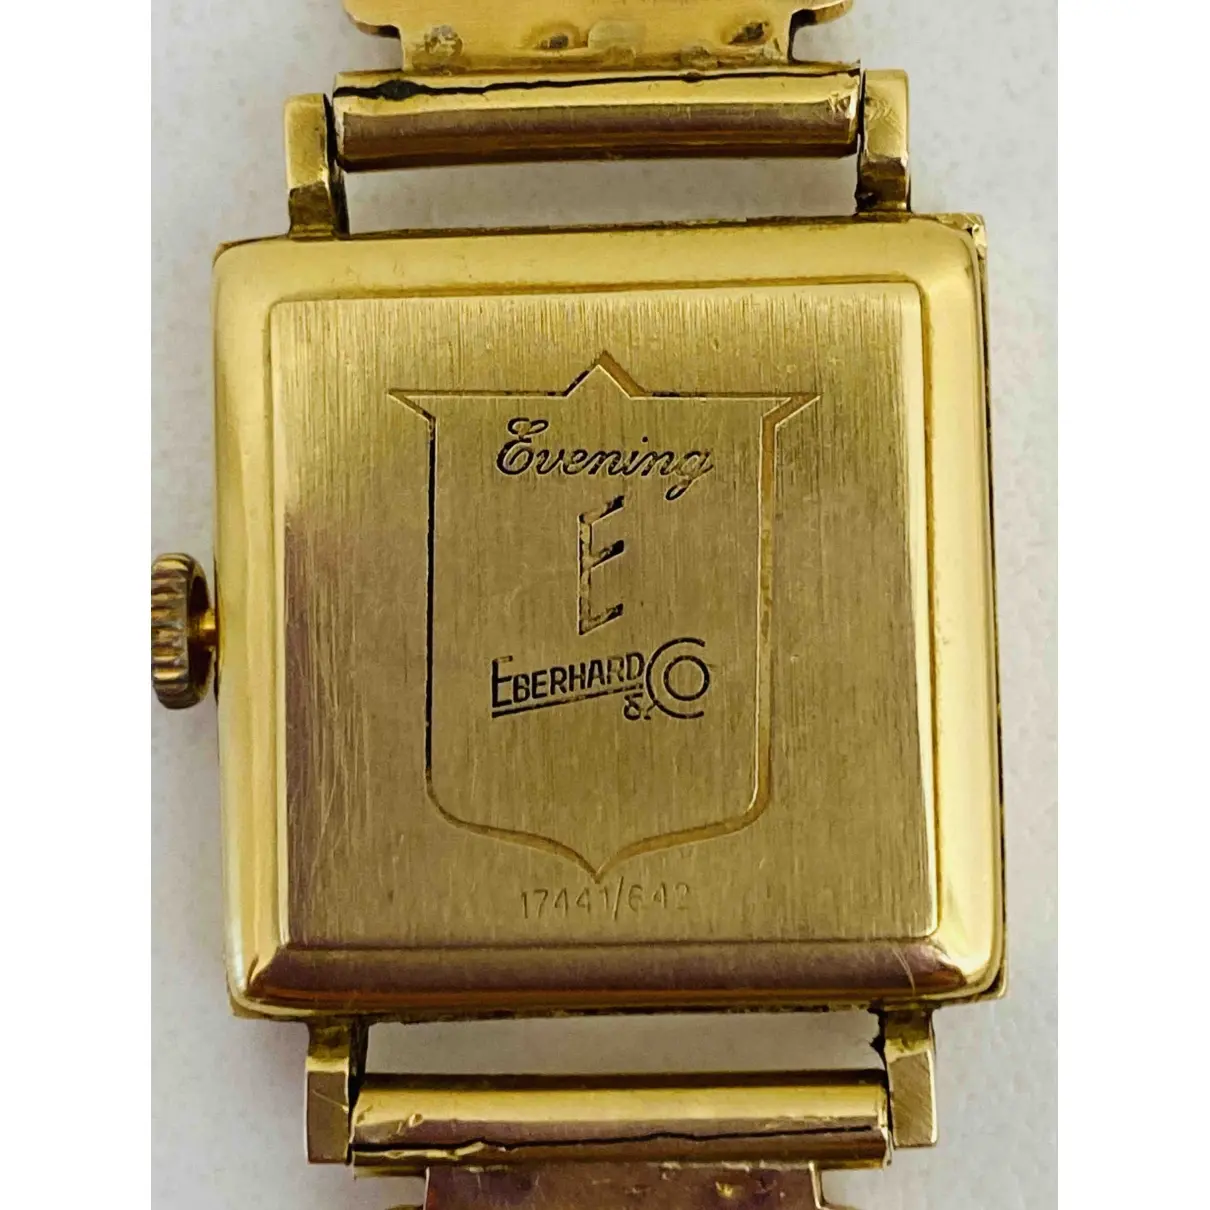 Buy Eberhard Yellow gold watch online - Vintage